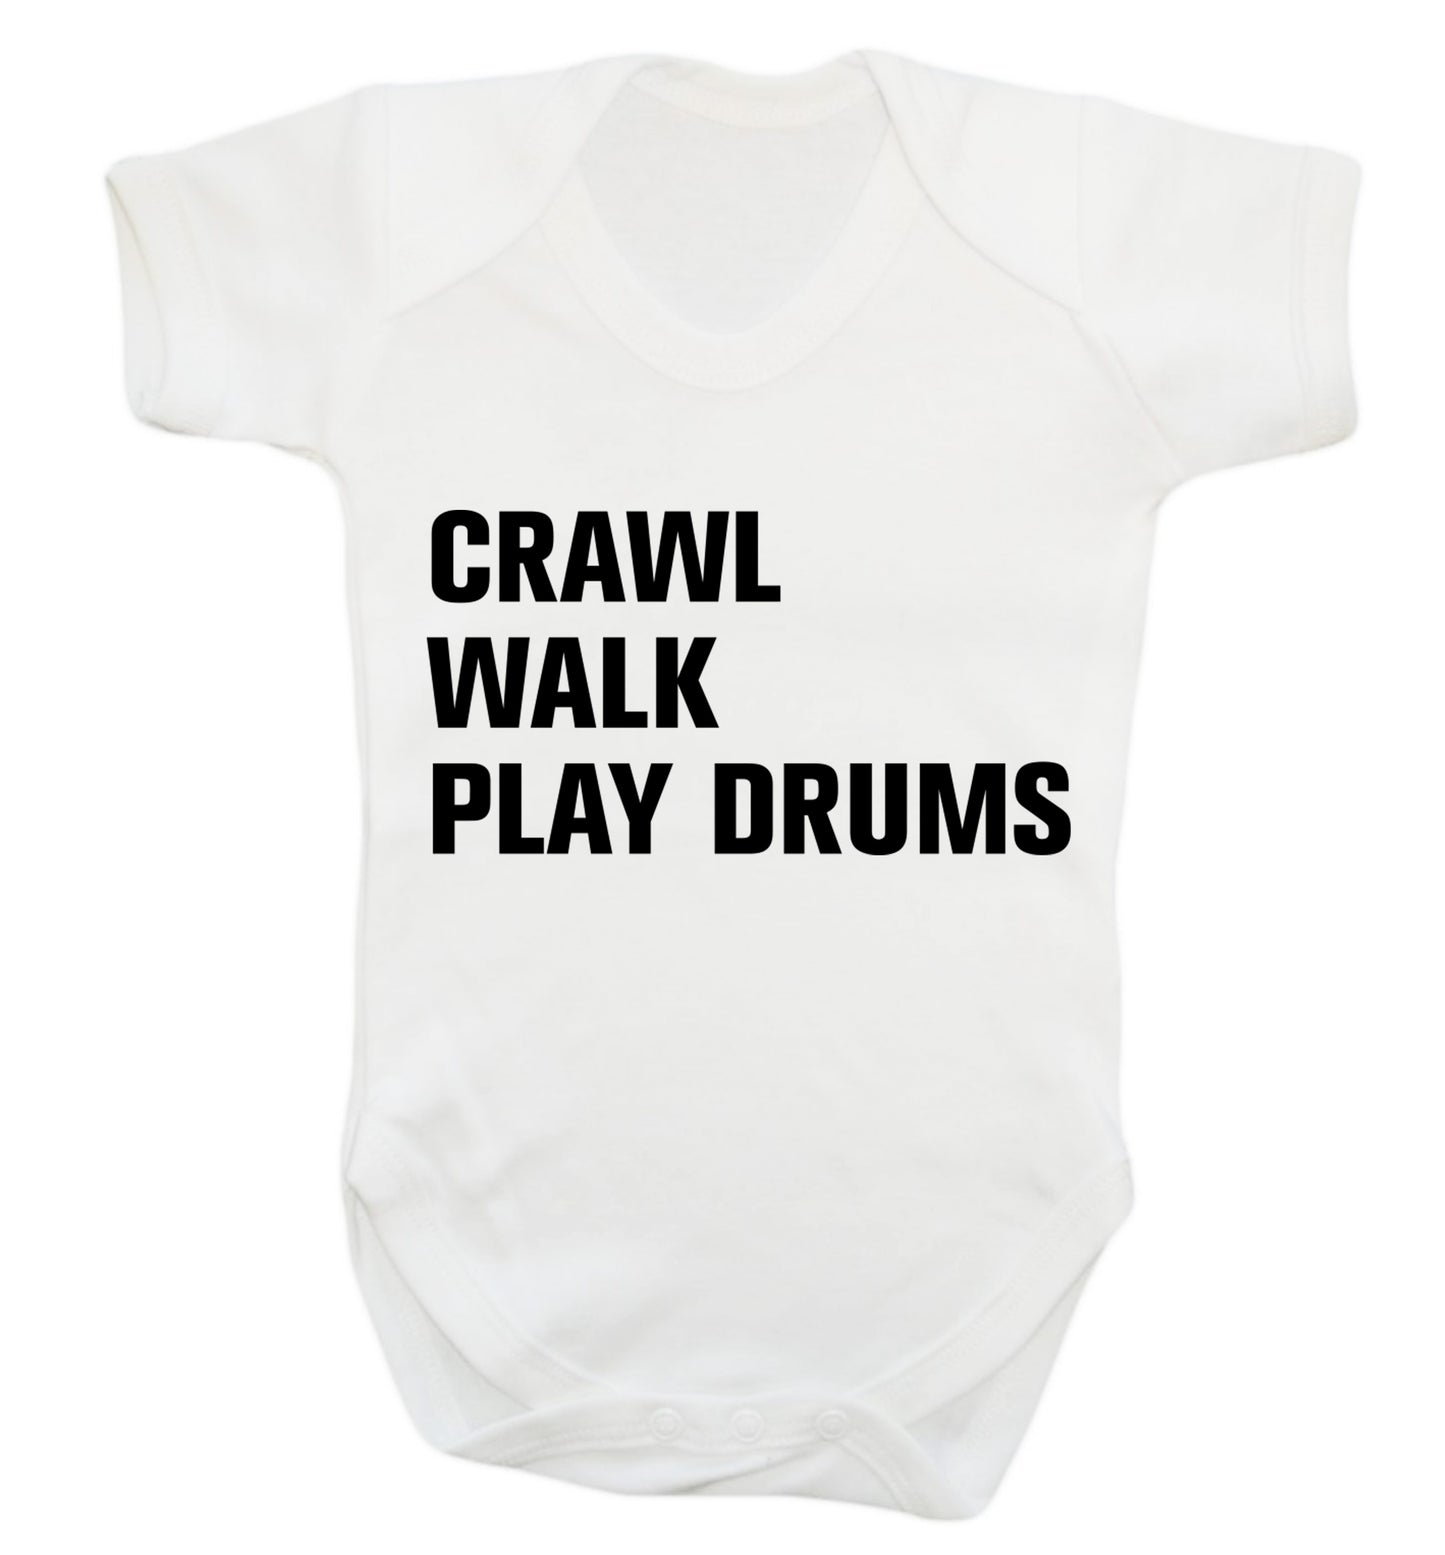 Crawl walk play drums Baby Vest white 18-24 months